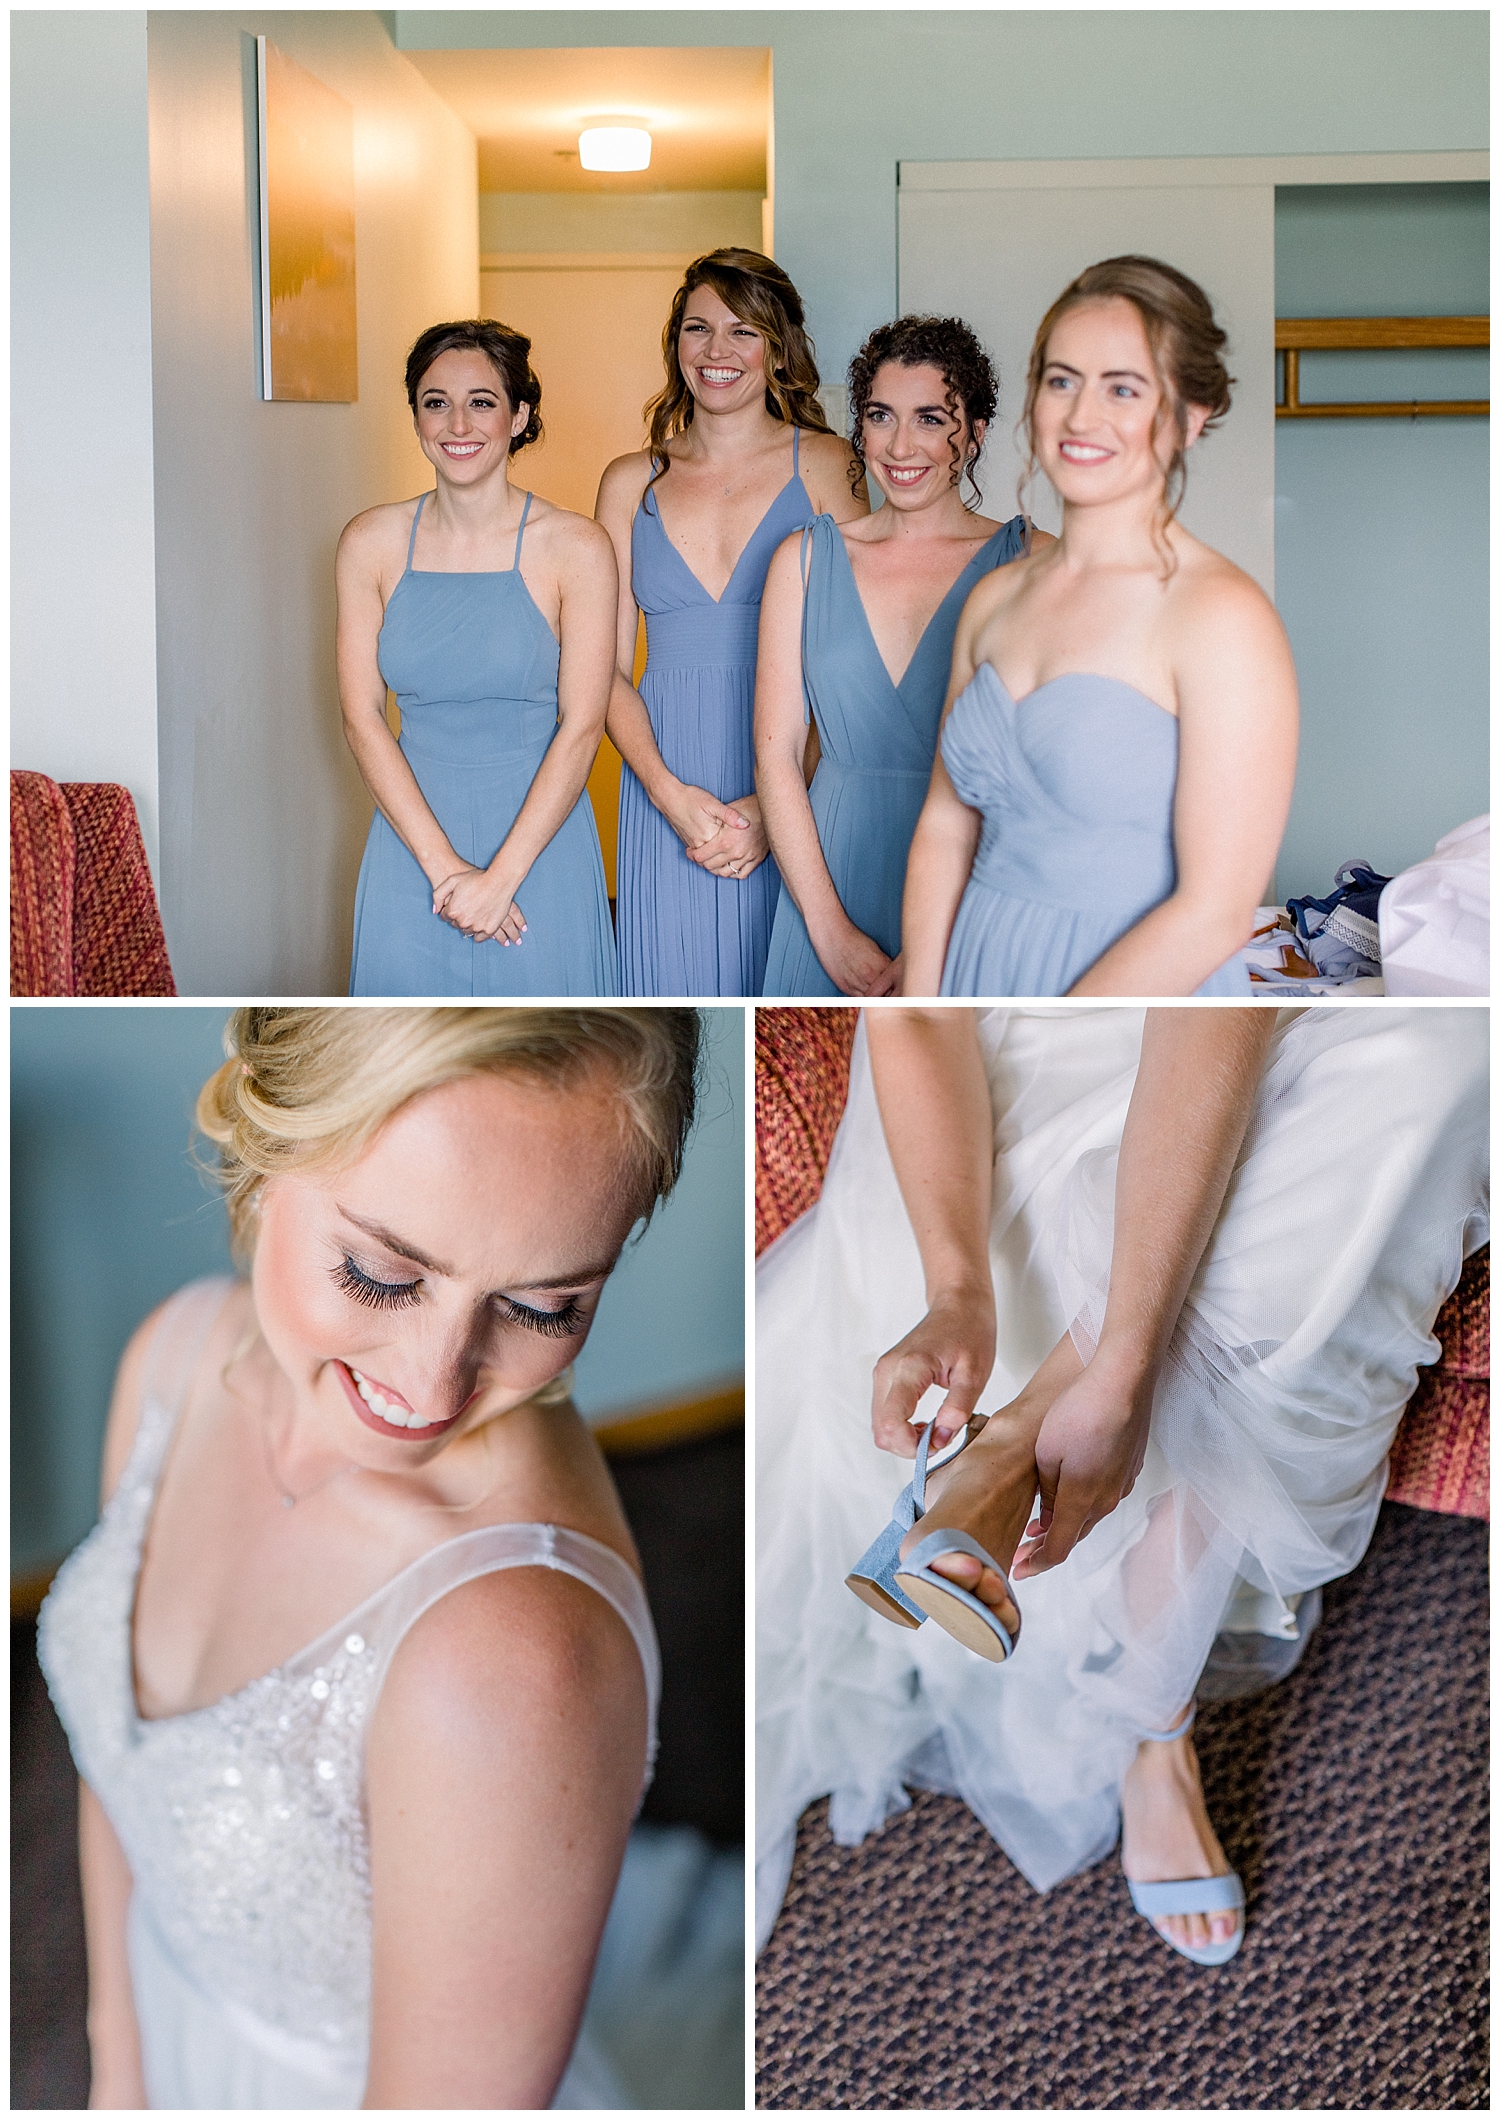 Bridal prep at a Sugarloaf Mountain Resort Wedding in Maine, photos by Halie Olszowy.